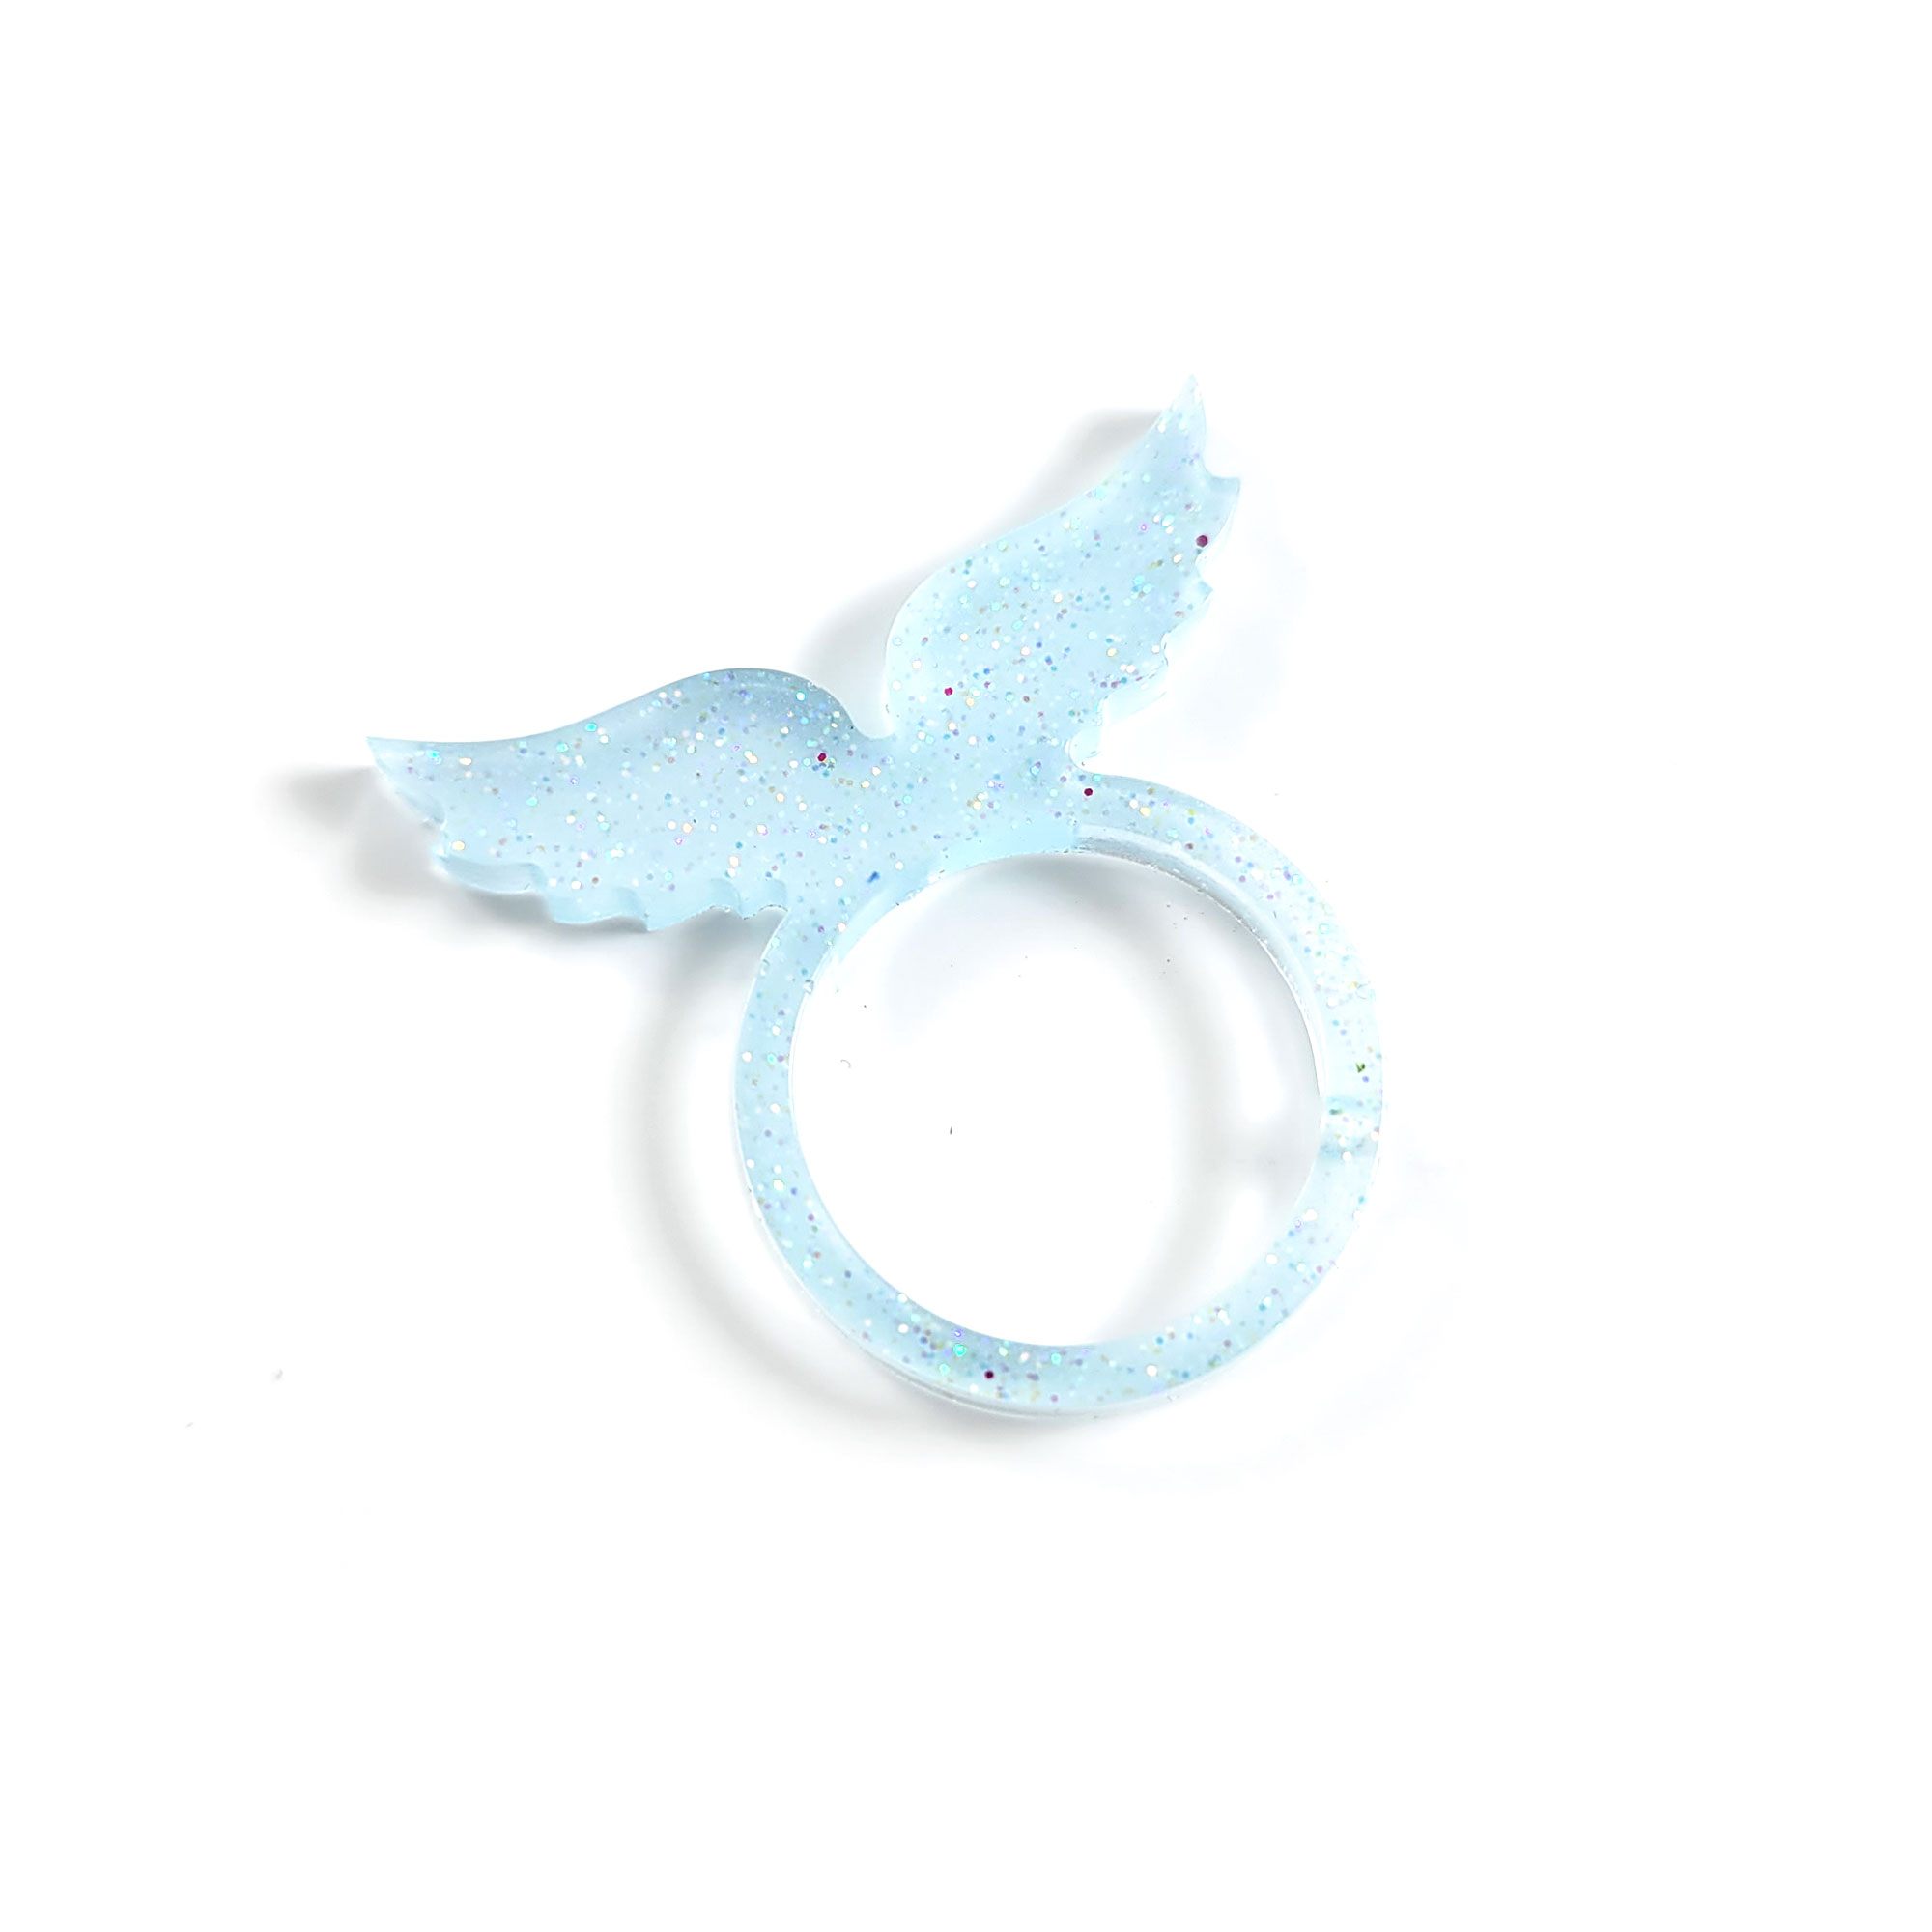 Ineffable Angel Wings Ring by Wilde Designs